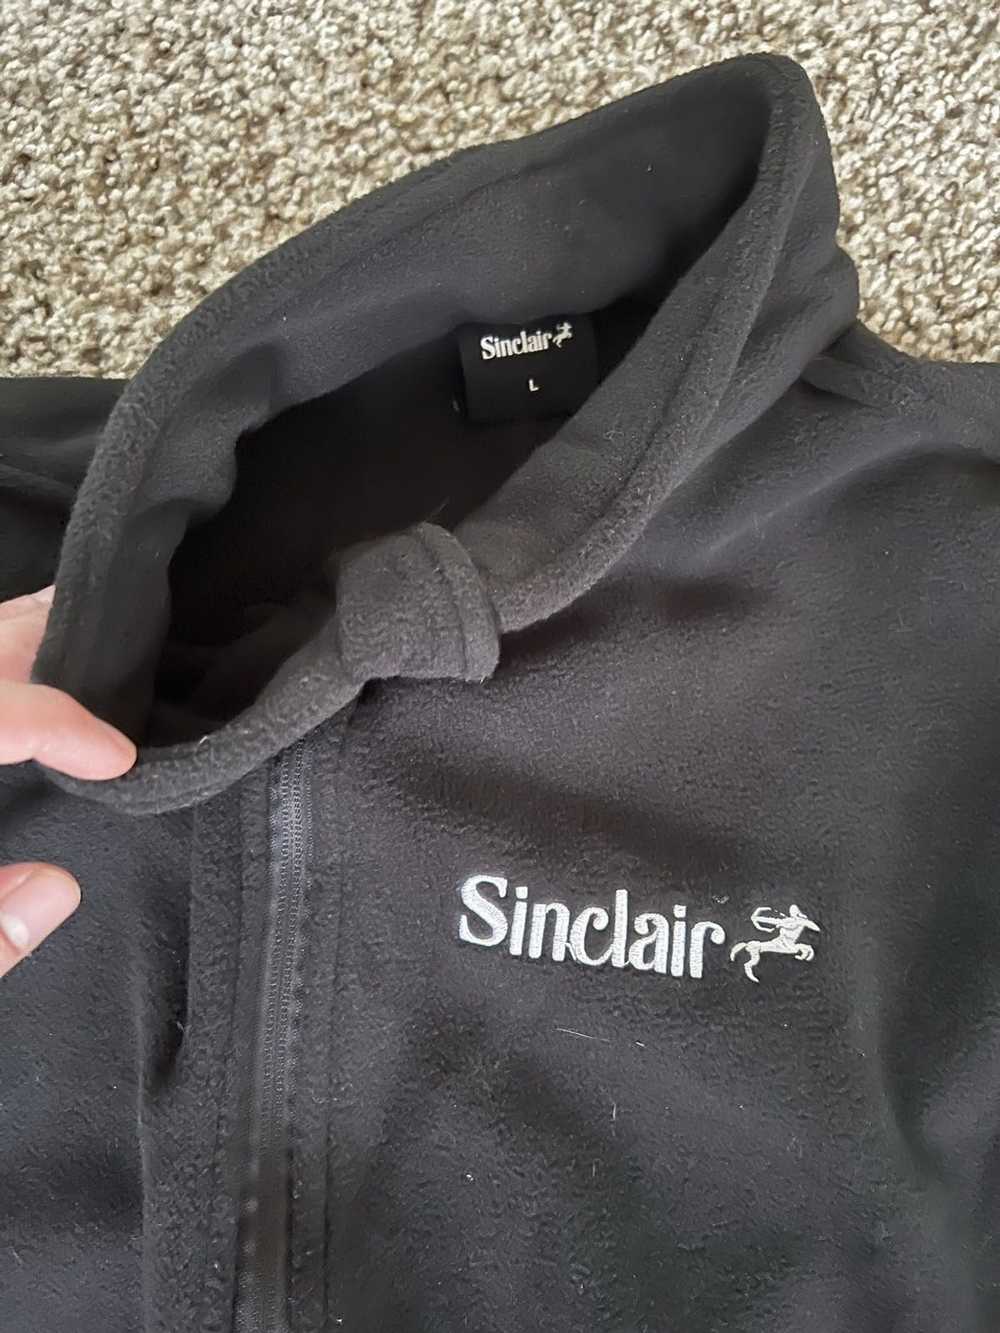 Sinclair Global Sinclair Fleece L - image 2